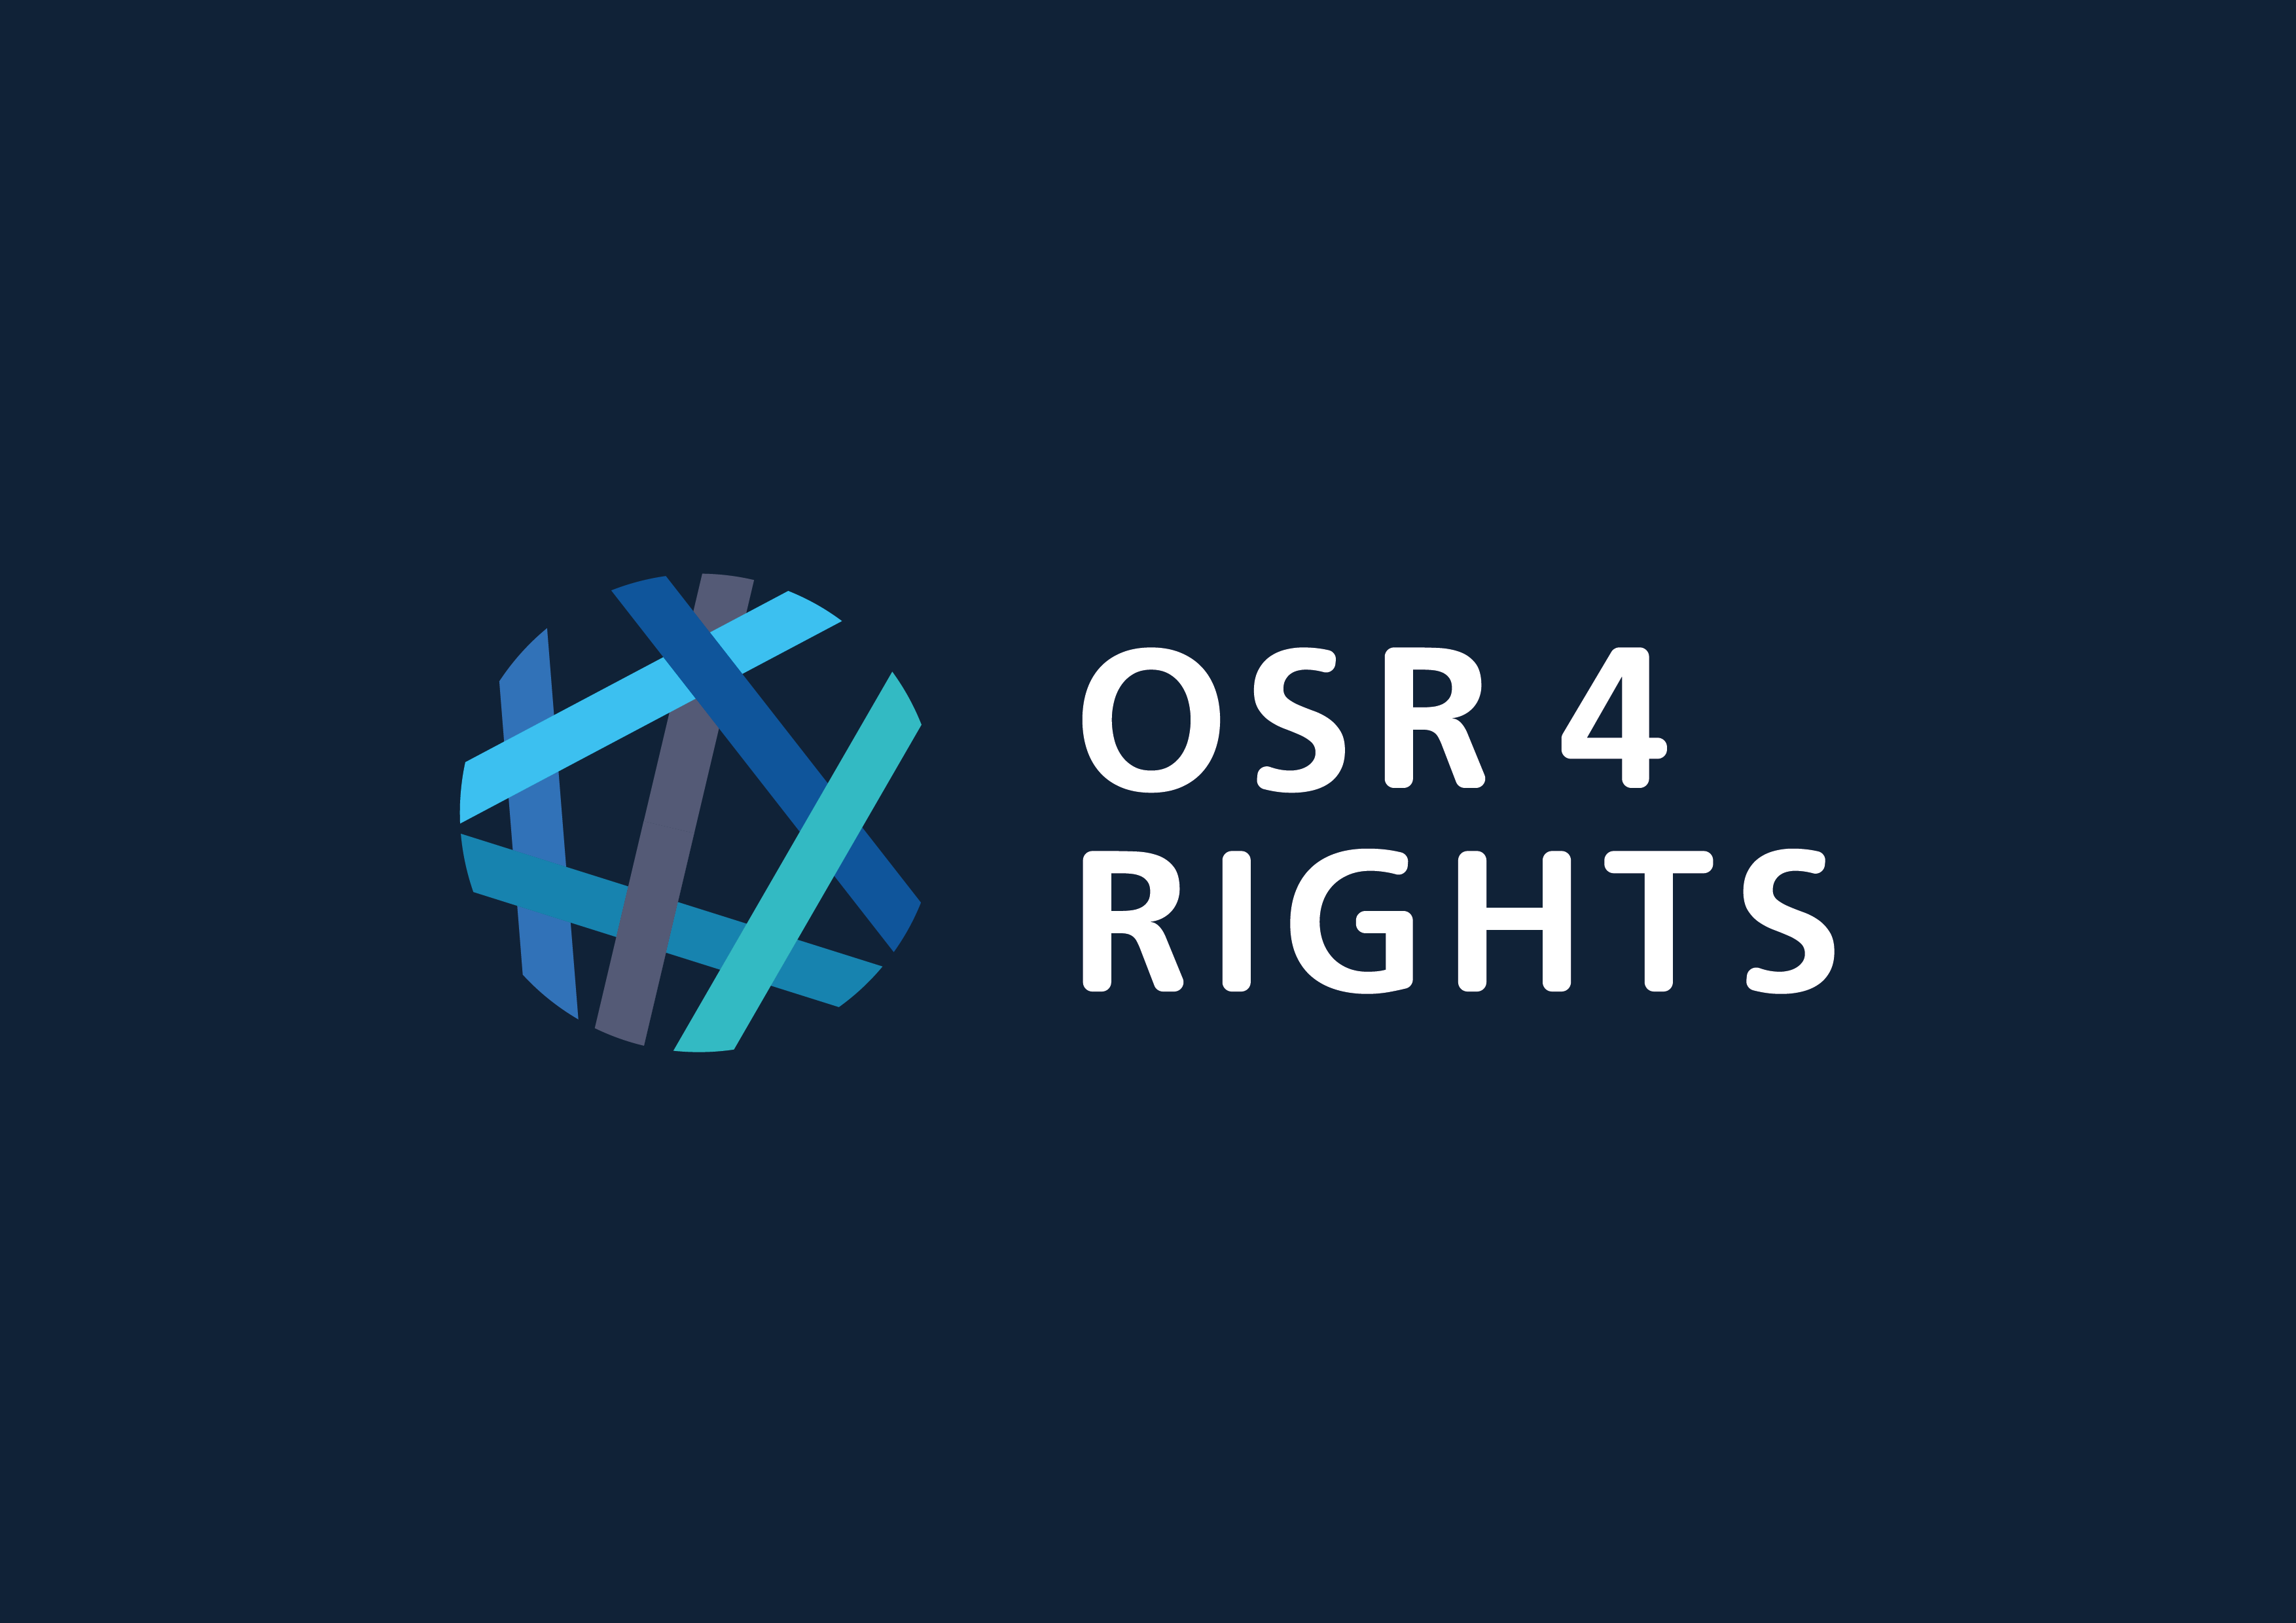 OSR 4 RIGHTS logo